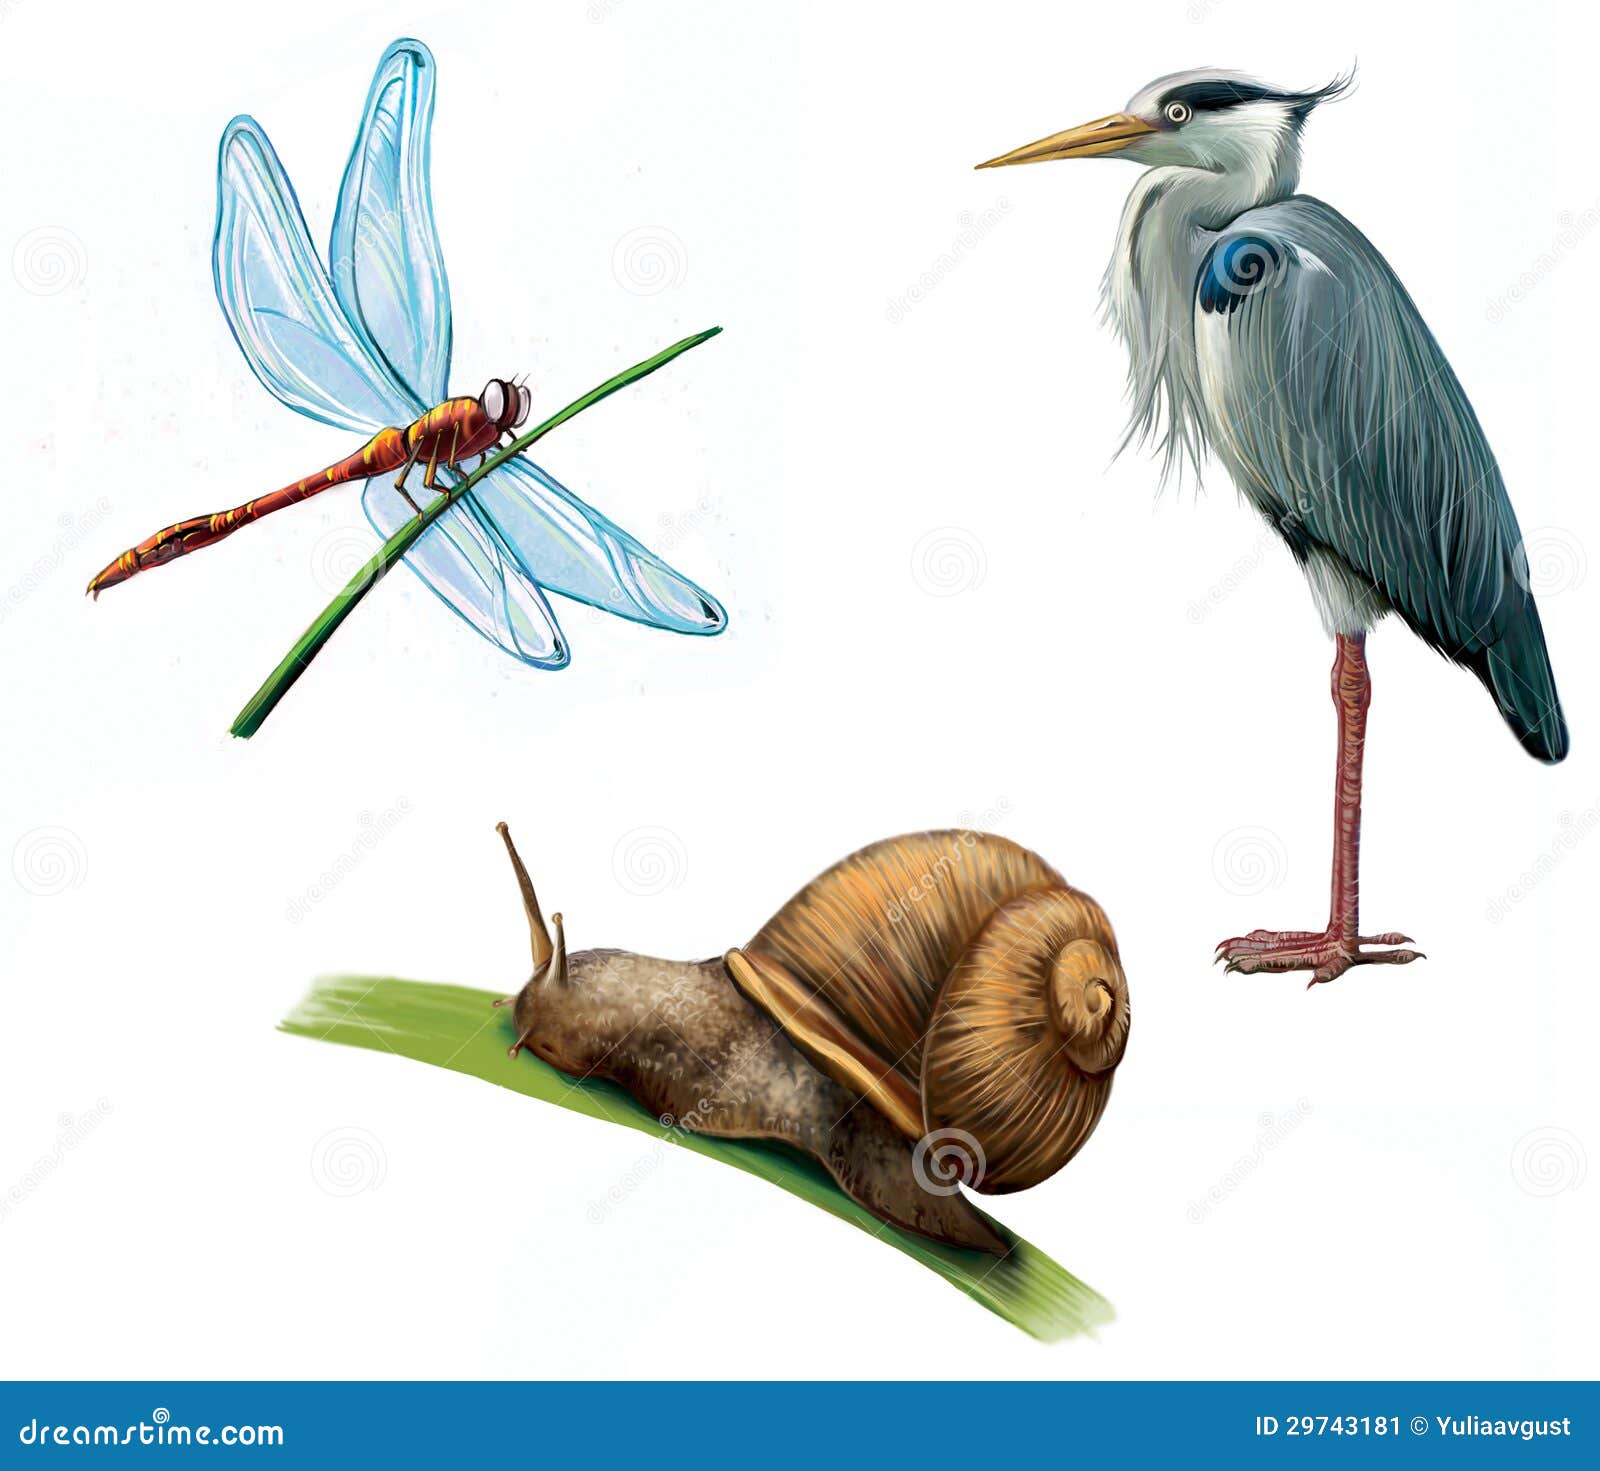 grey heron, dragon fly, and snail